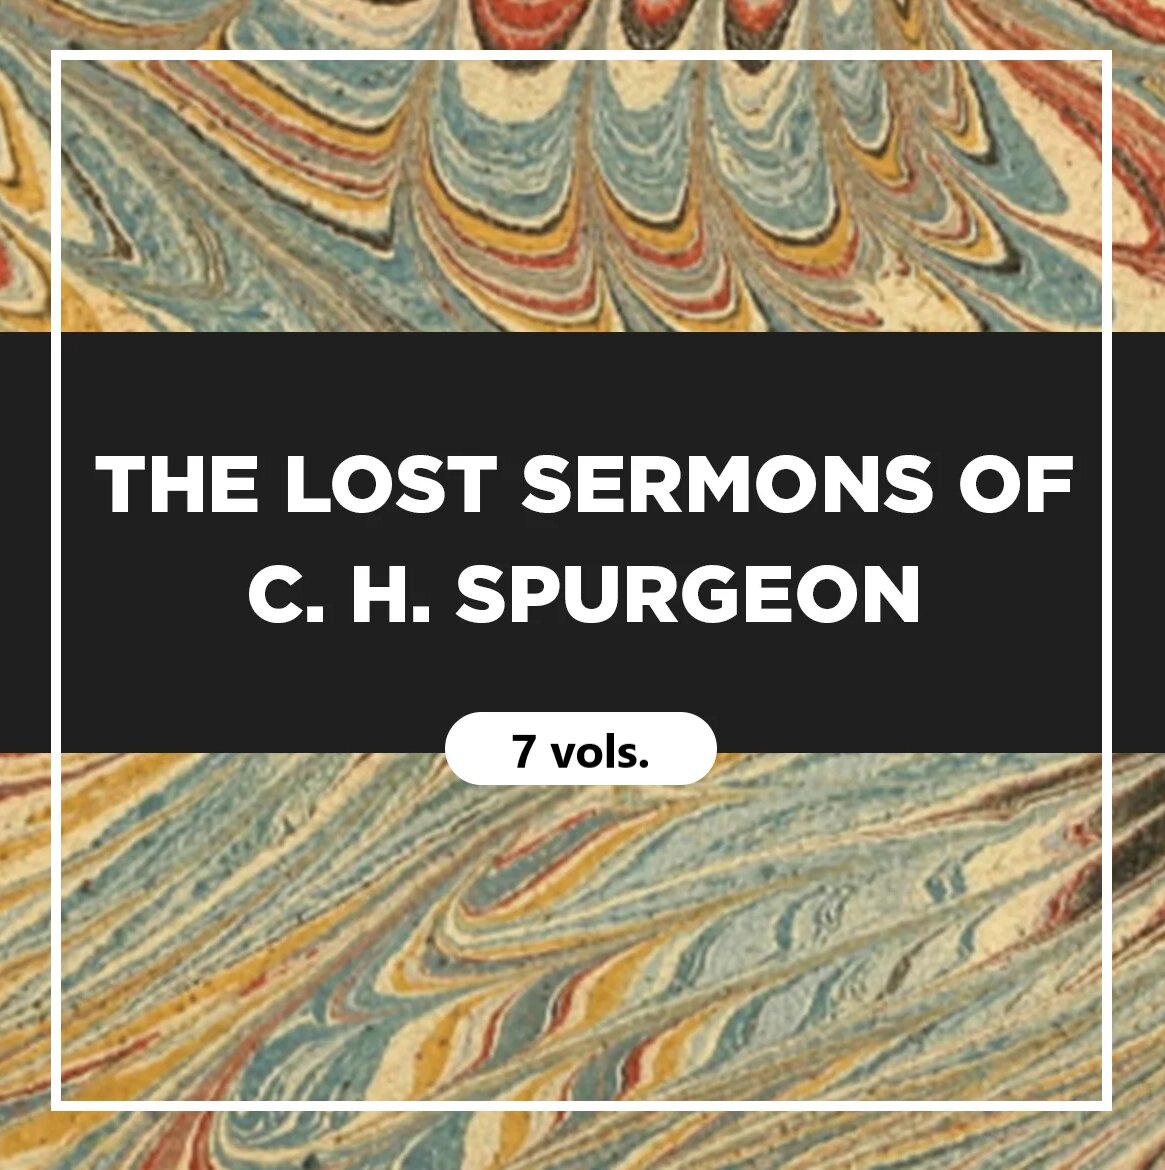 The Lost Sermons of C. H. Spurgeon (7 vols.)